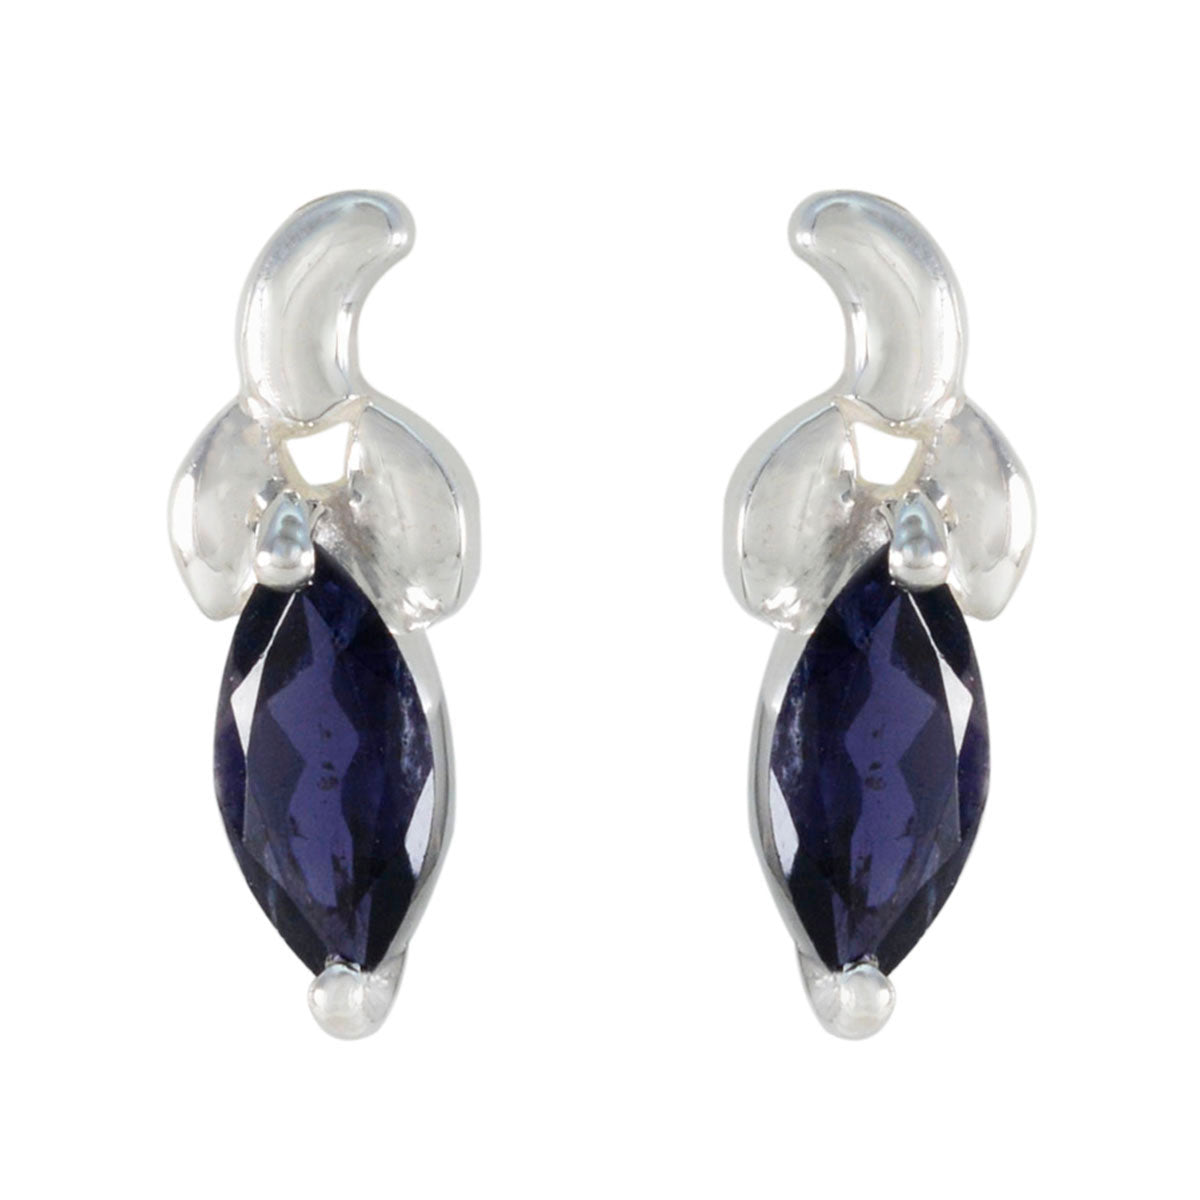 Riyo Handsome 925 Sterling Silver Earring For Women Iolite Earring Bezel Setting Blue Earring Stud Earring